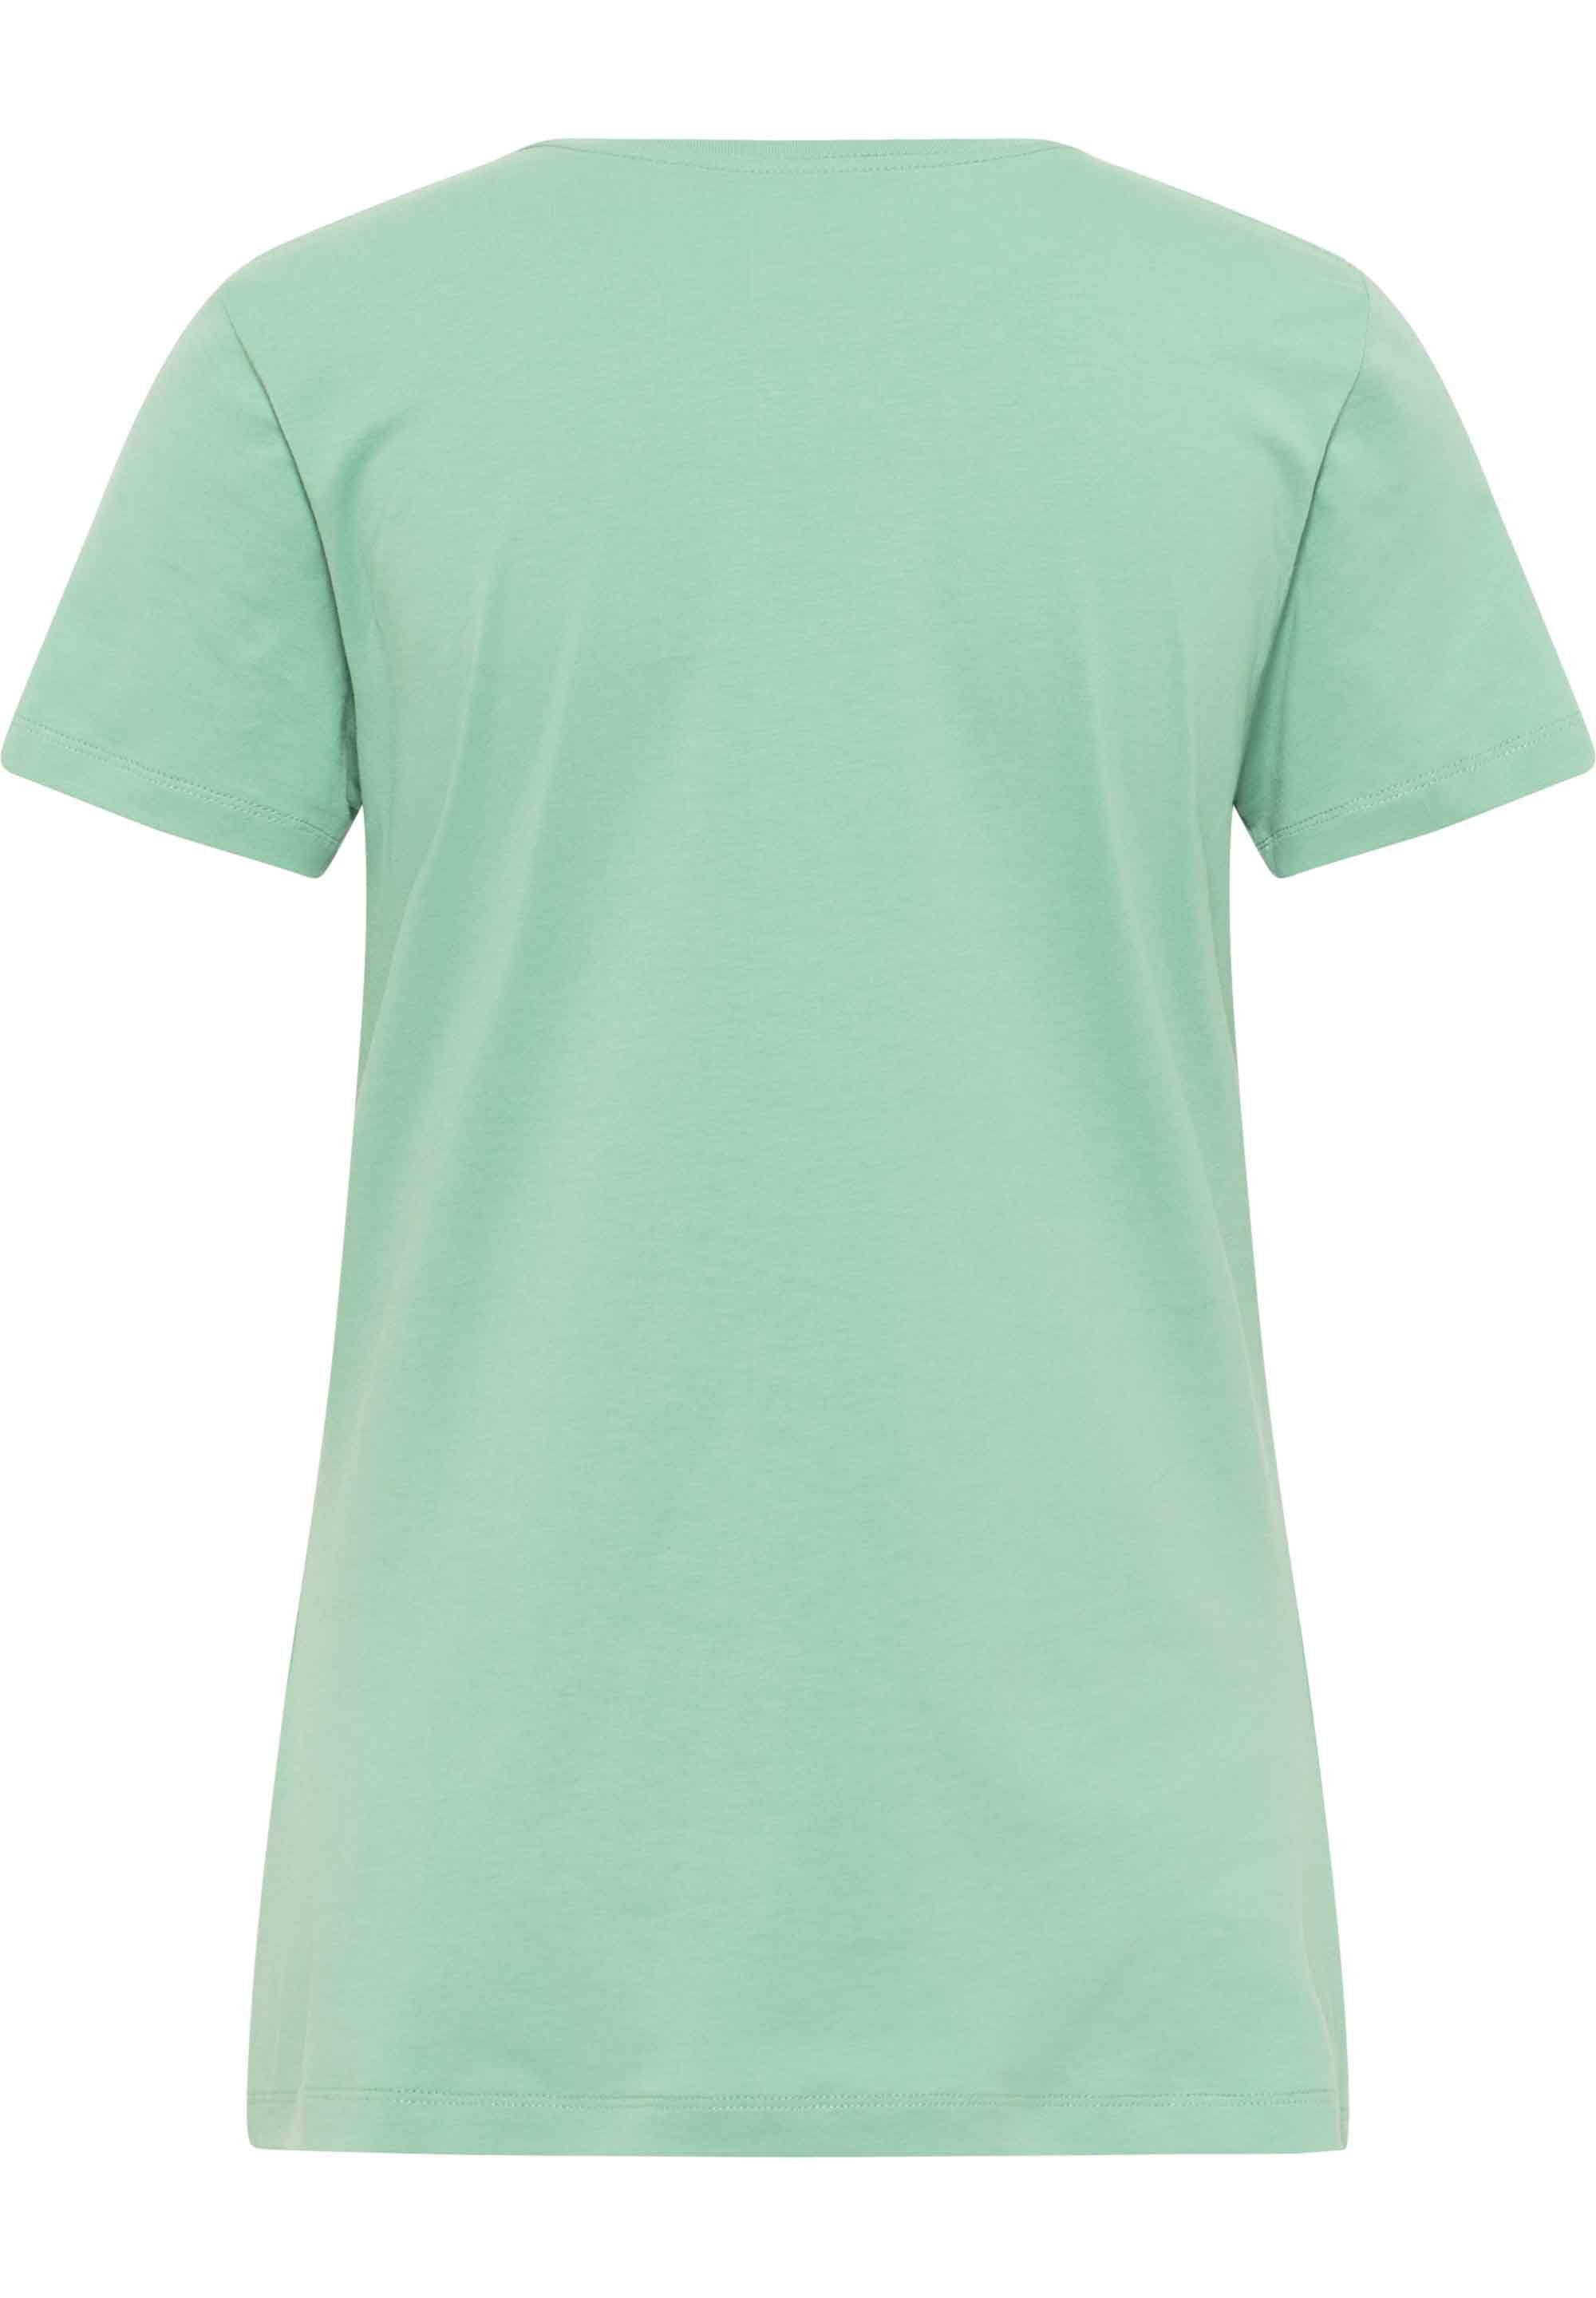 SOMWR CONSERVE T-Shirt GRE005